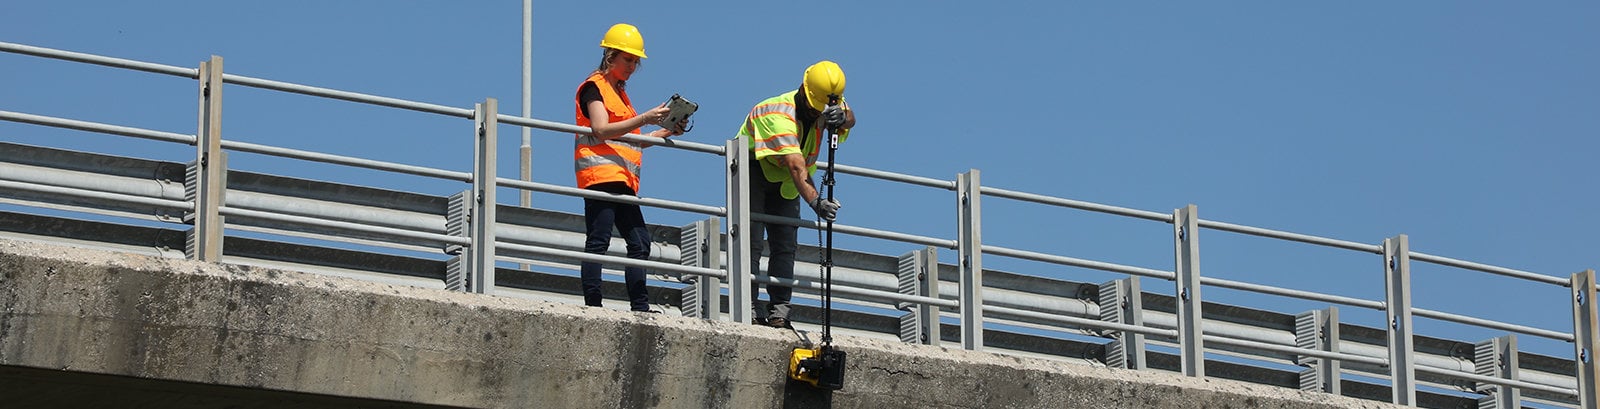 C-Thrue concretes scanner surveying an overpass